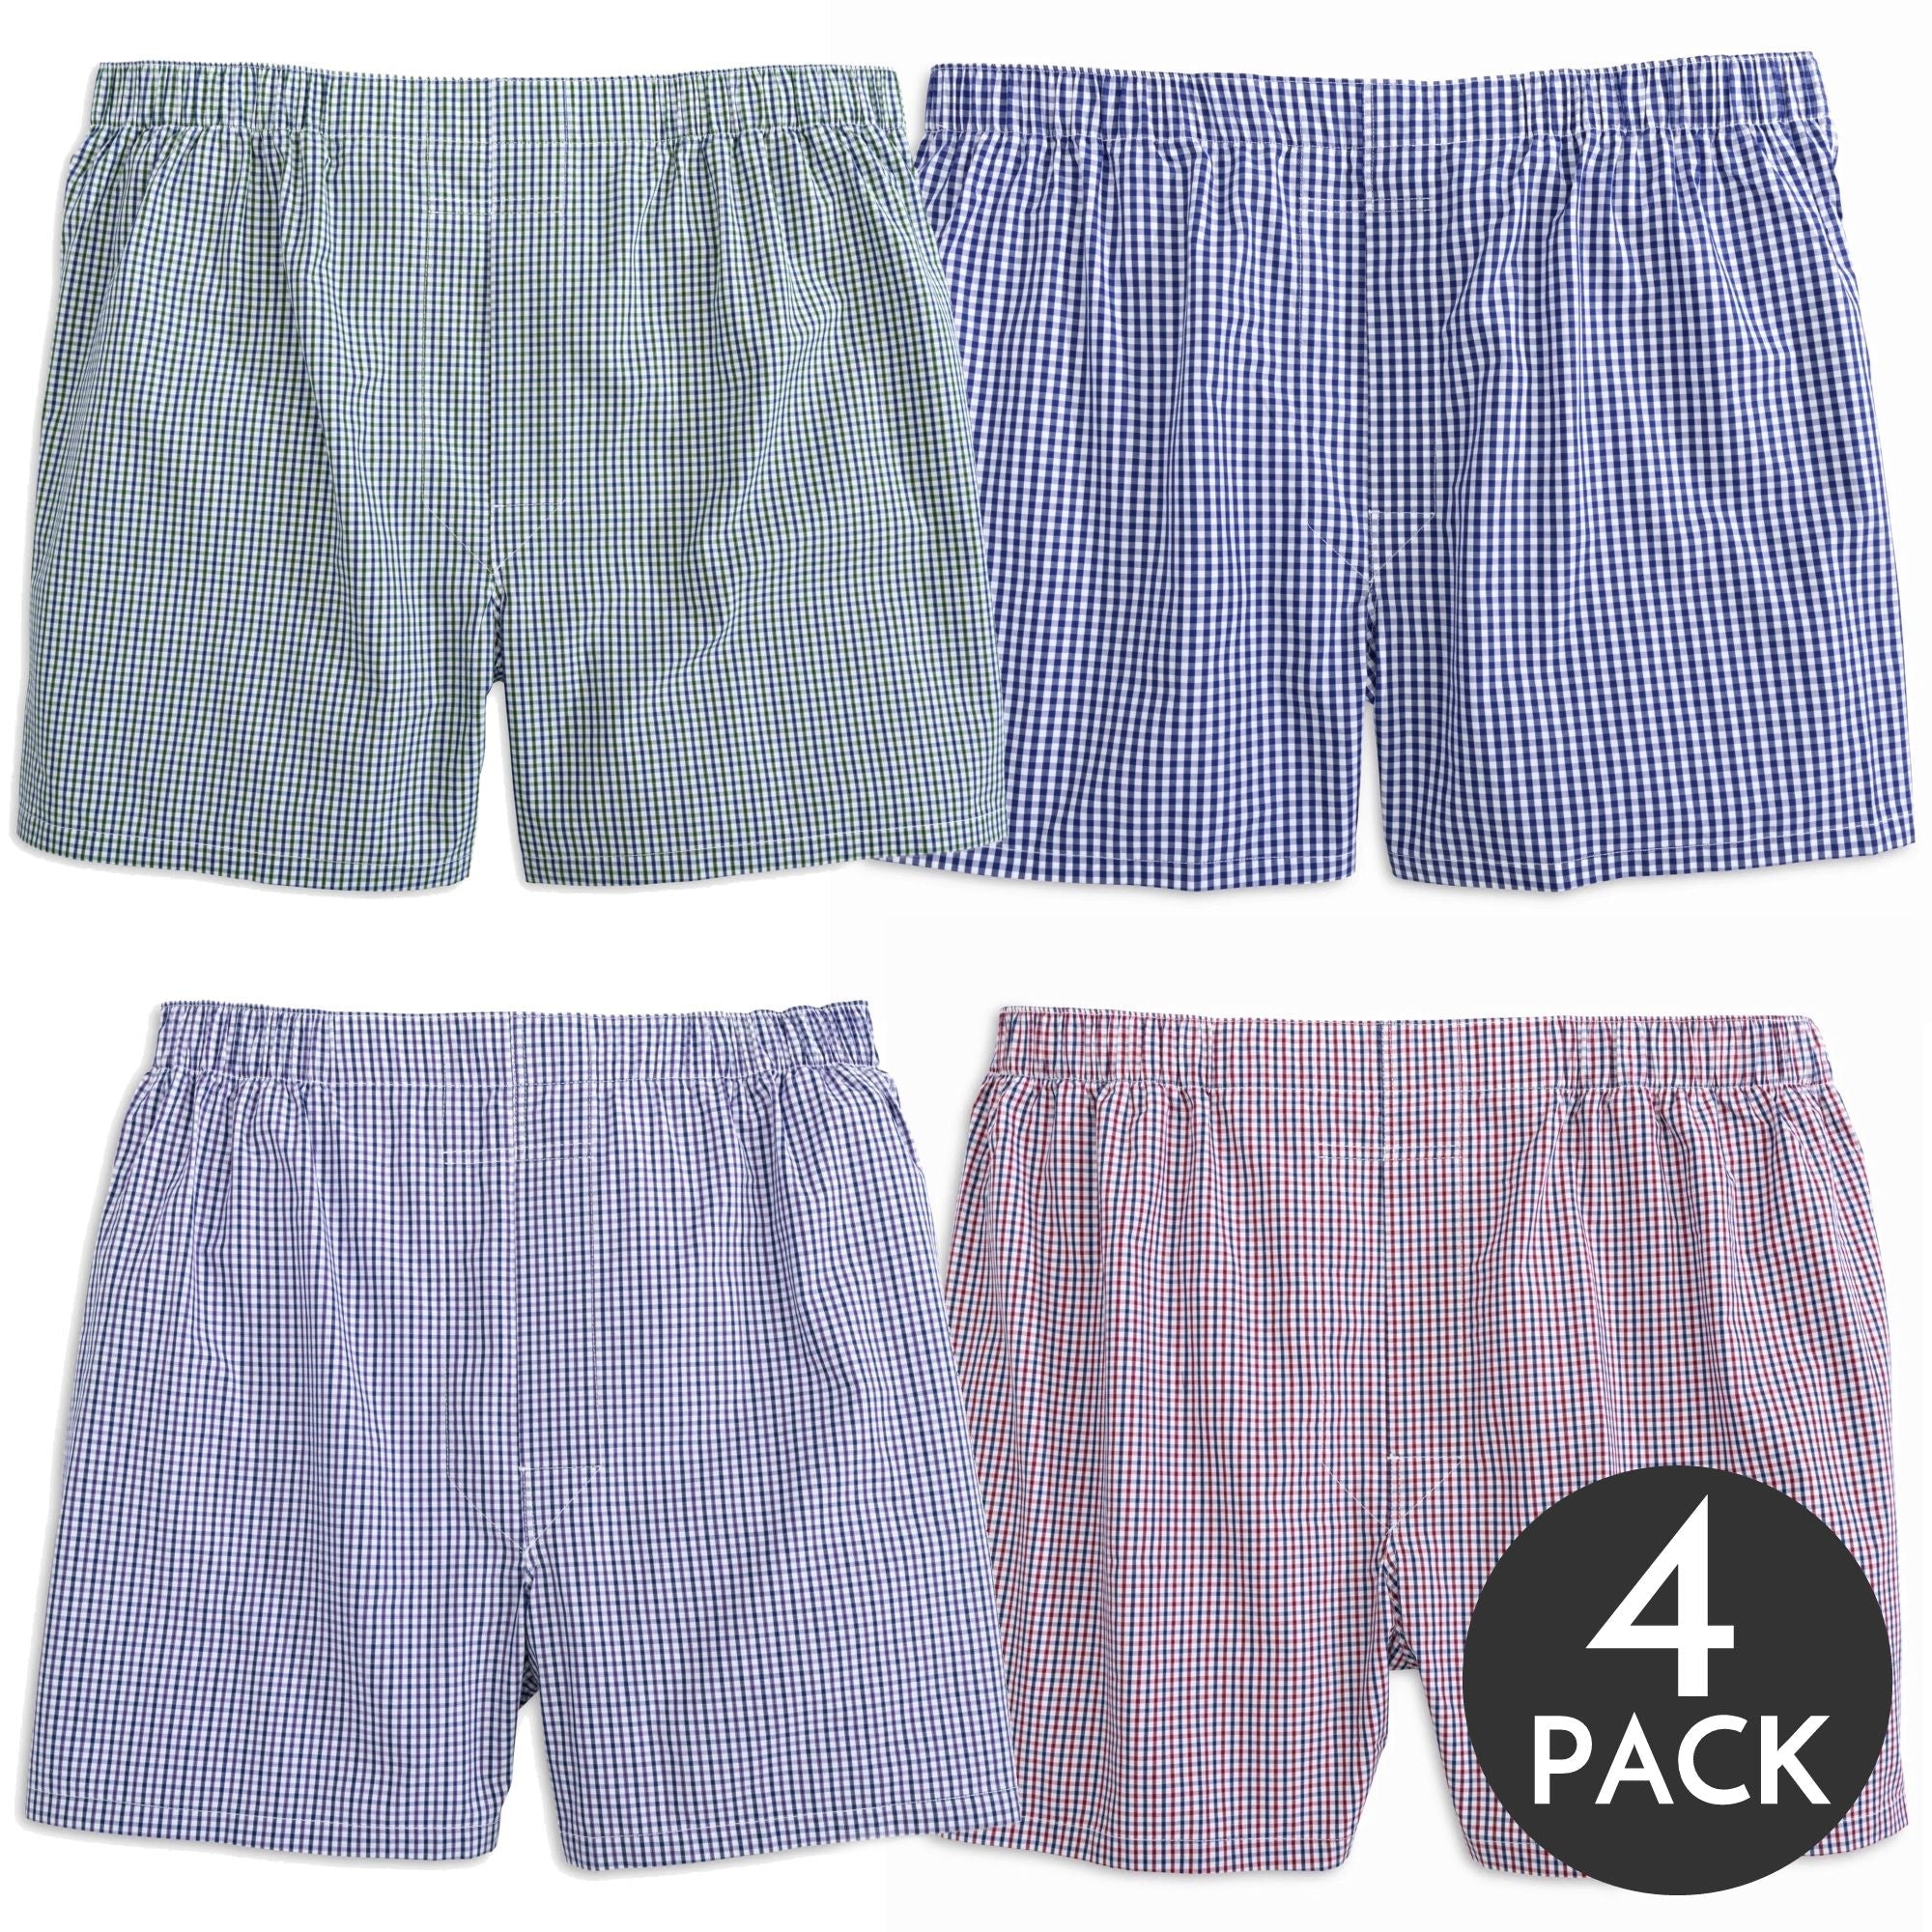 Multi Pack Poplin Check Full Make Cotton Boxer Shorts (4 Pack) (Average Sizing) by Batton